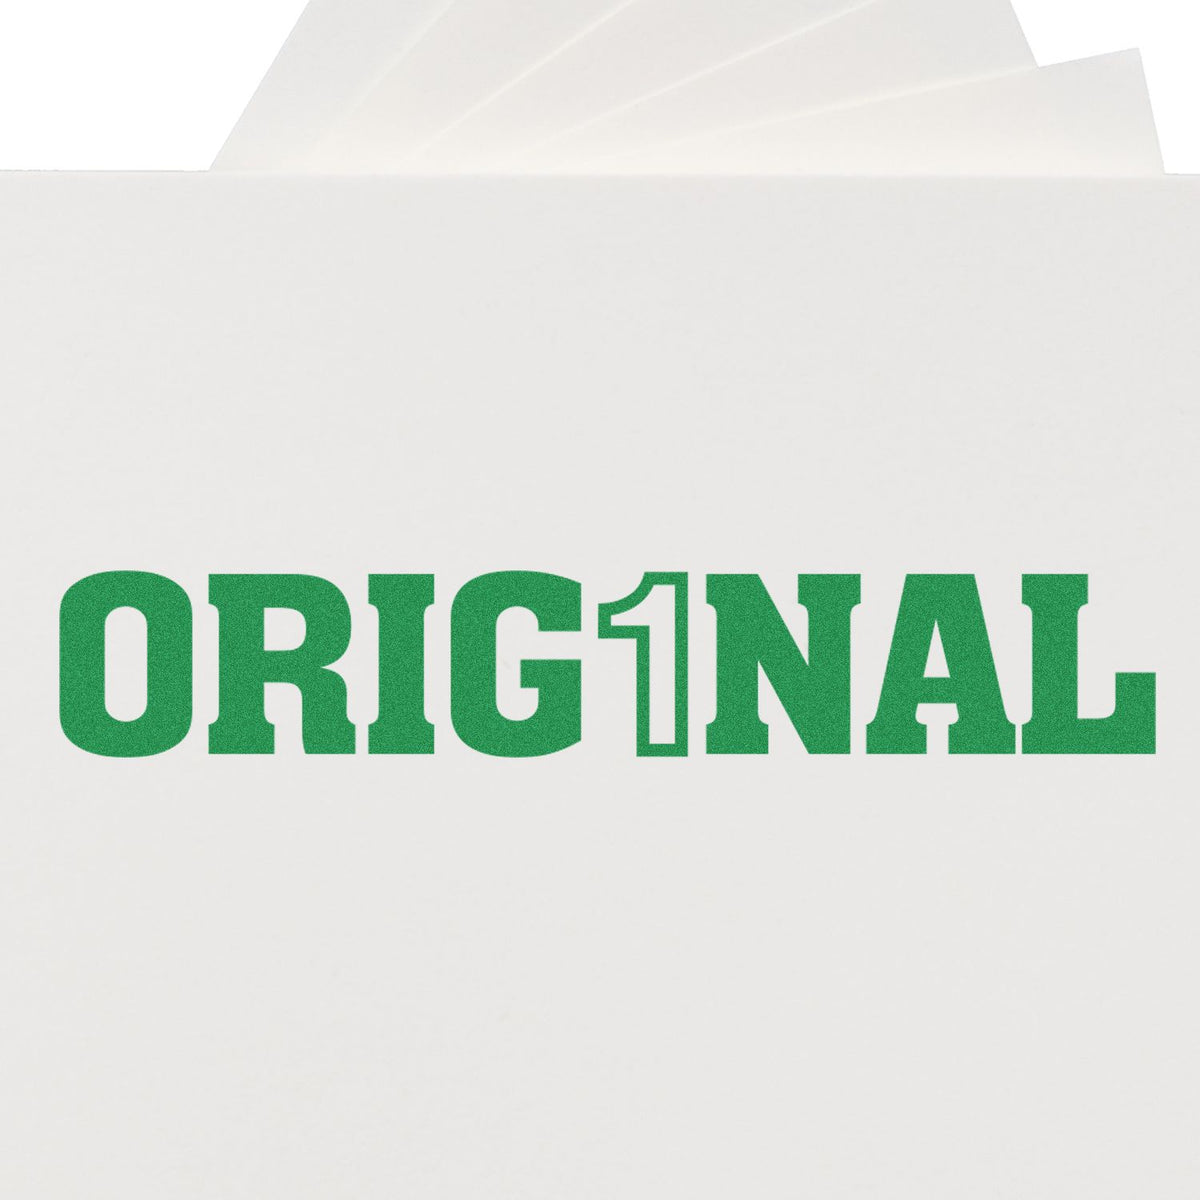 Large Pre-Inked Orig1nal Stamp In Use